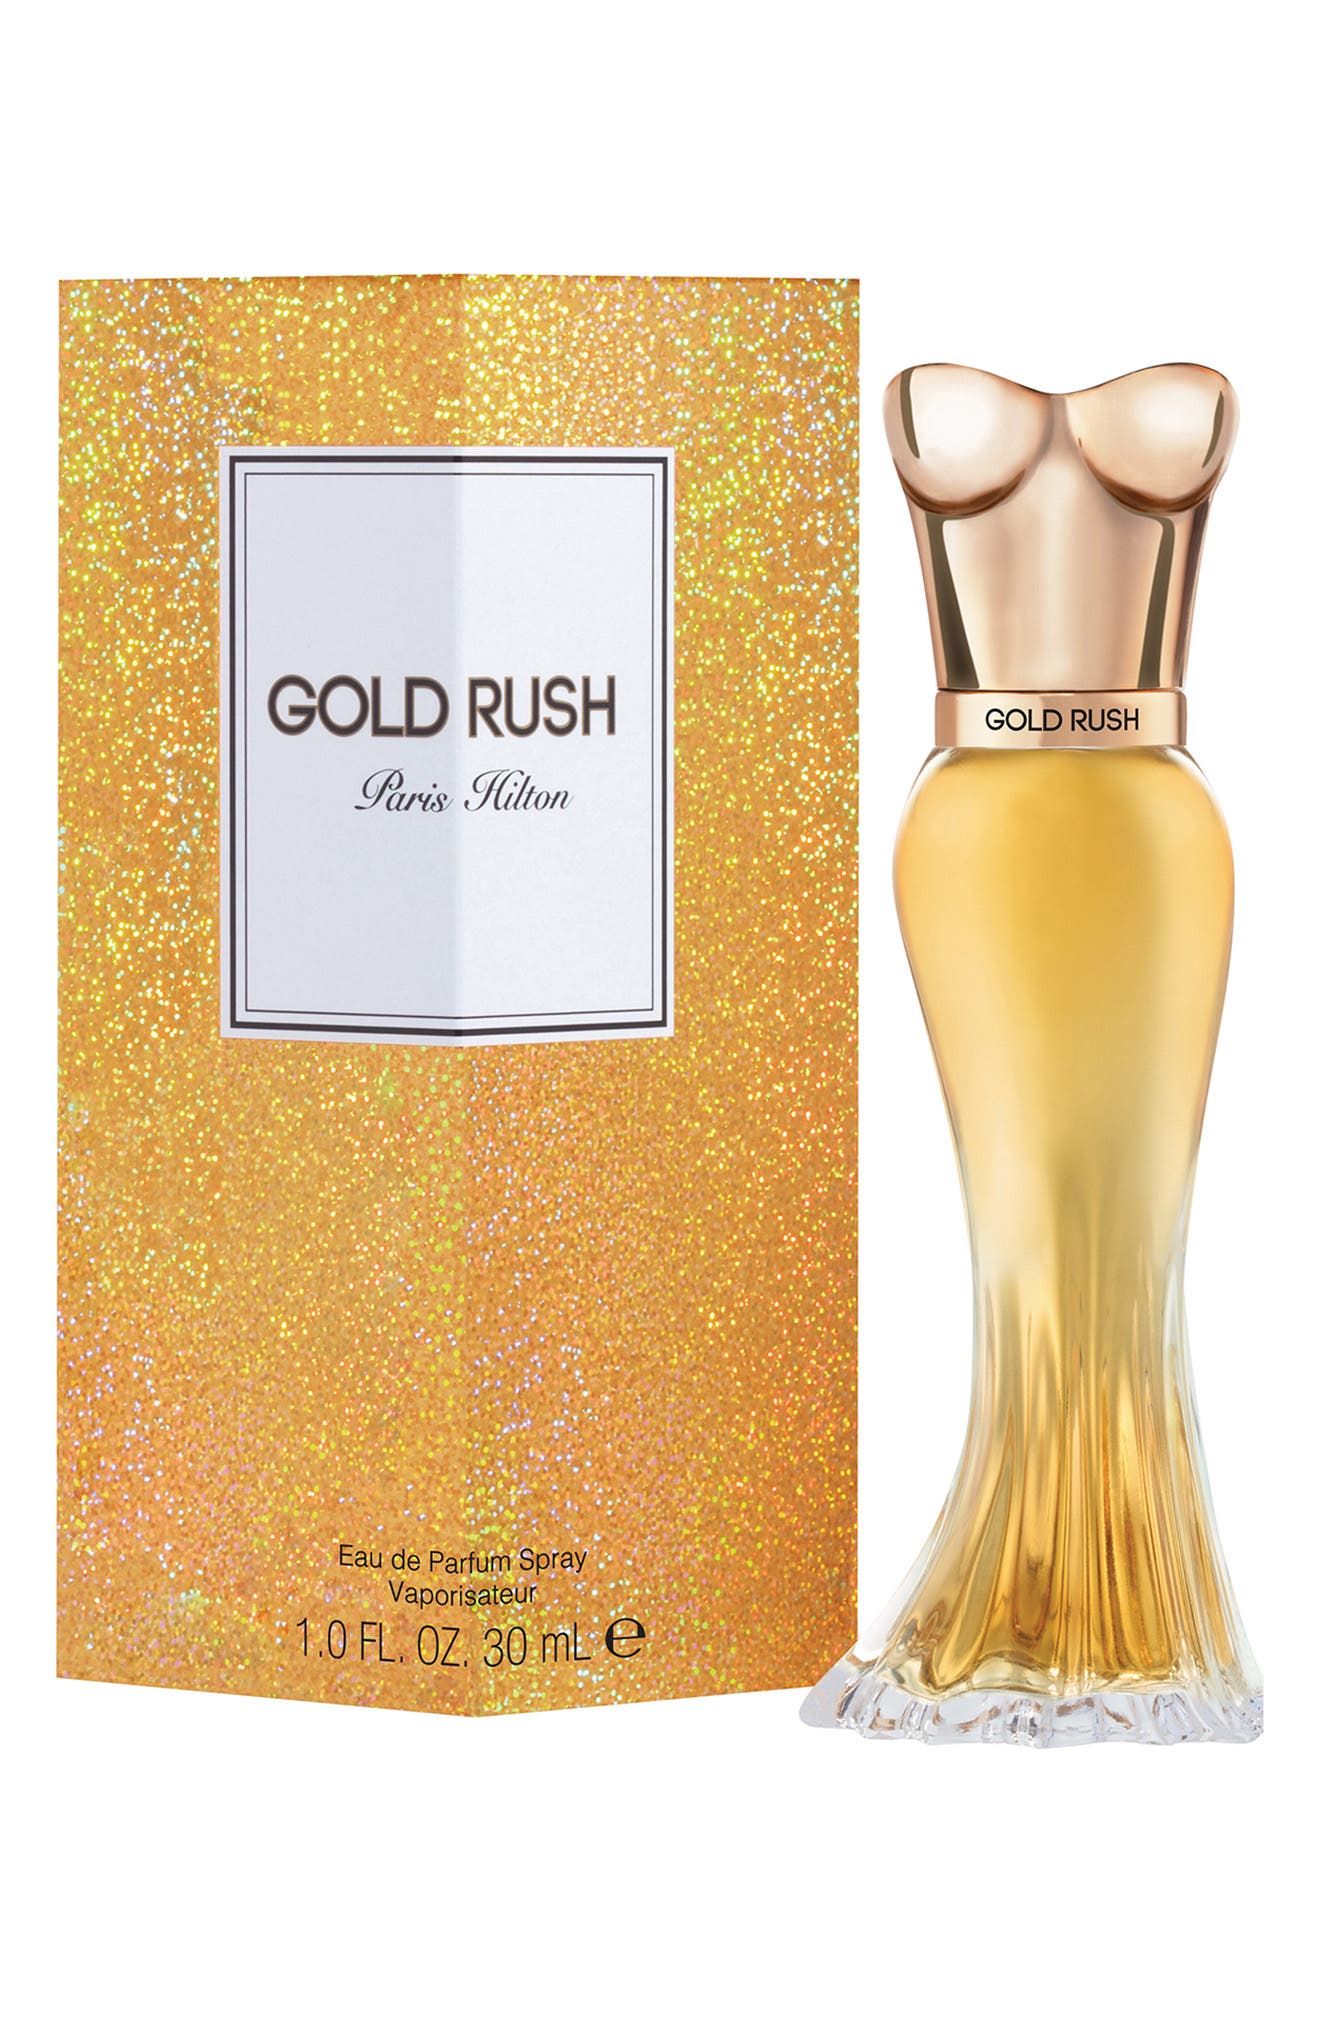 Gold Rush Eau de Parfum Spray Paris Hilton